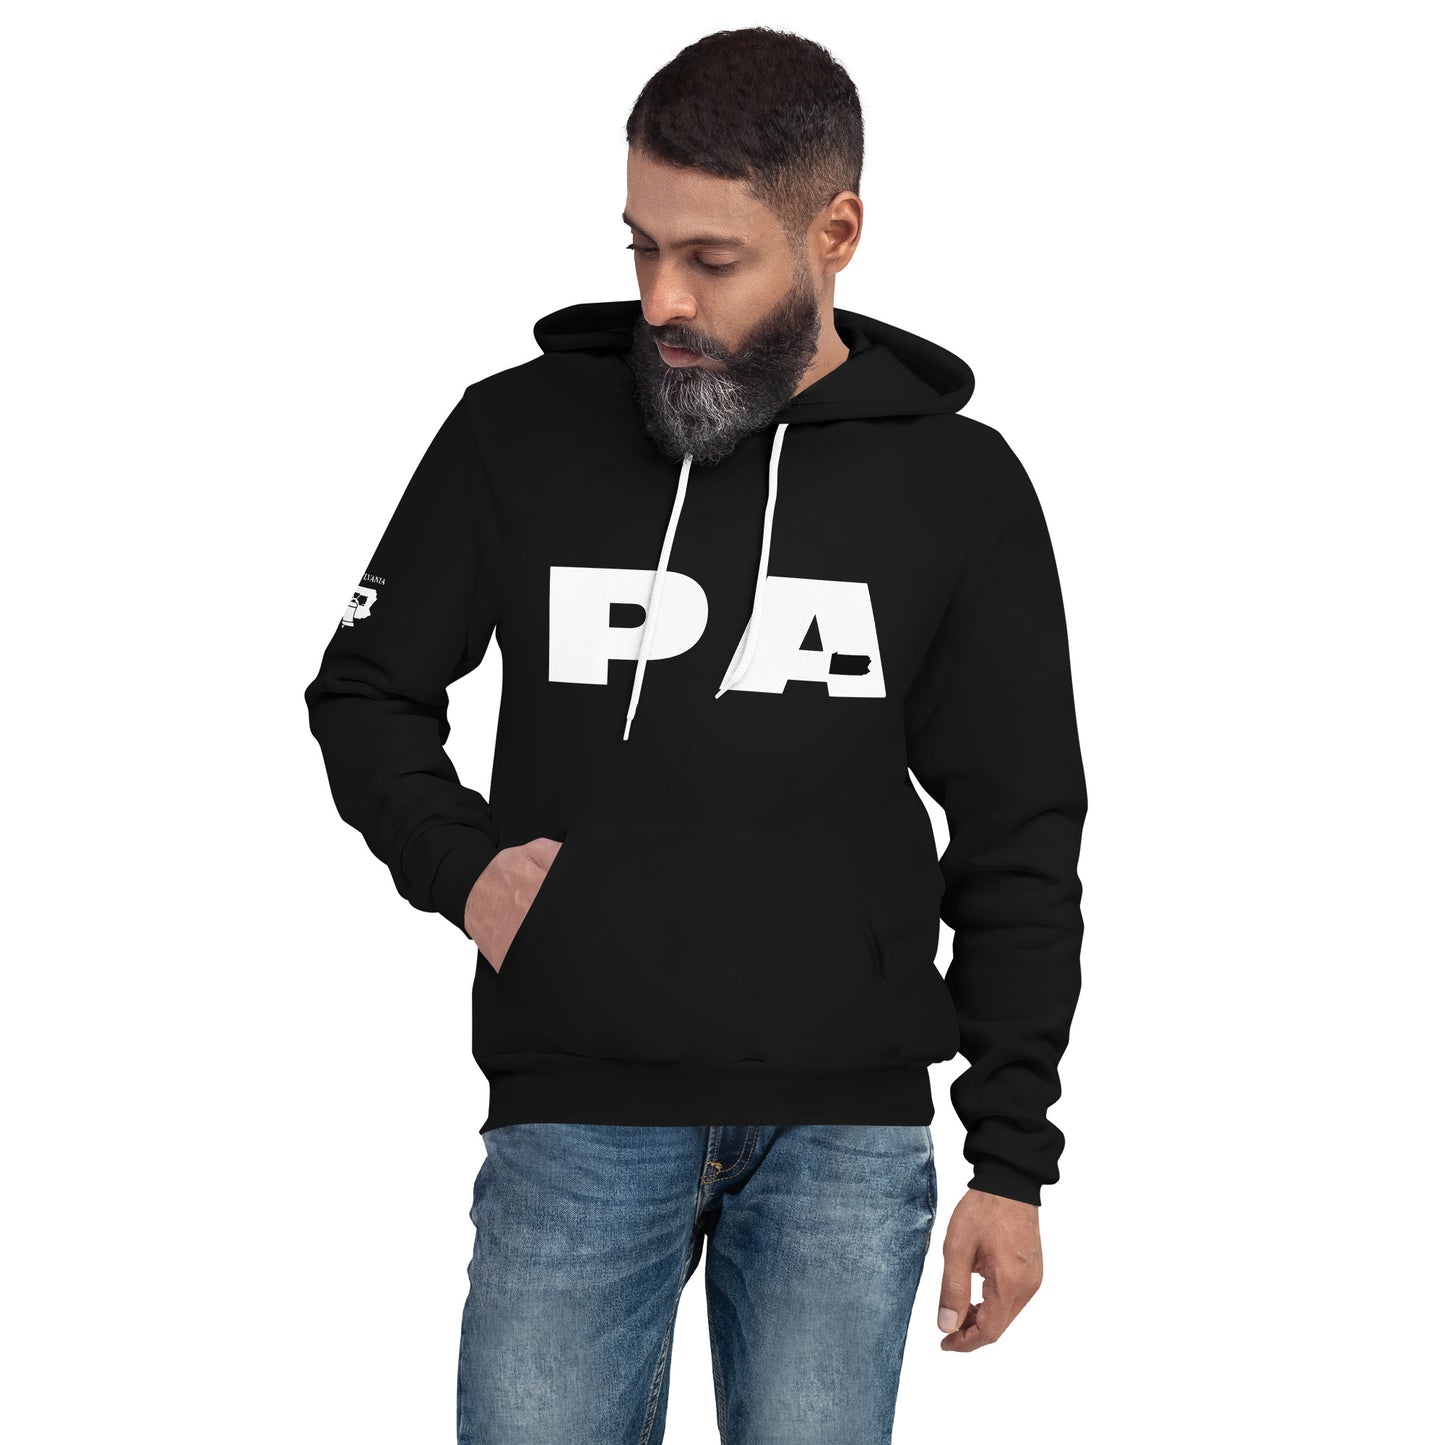 Unisex hoodie - PA (Pennsylvania)